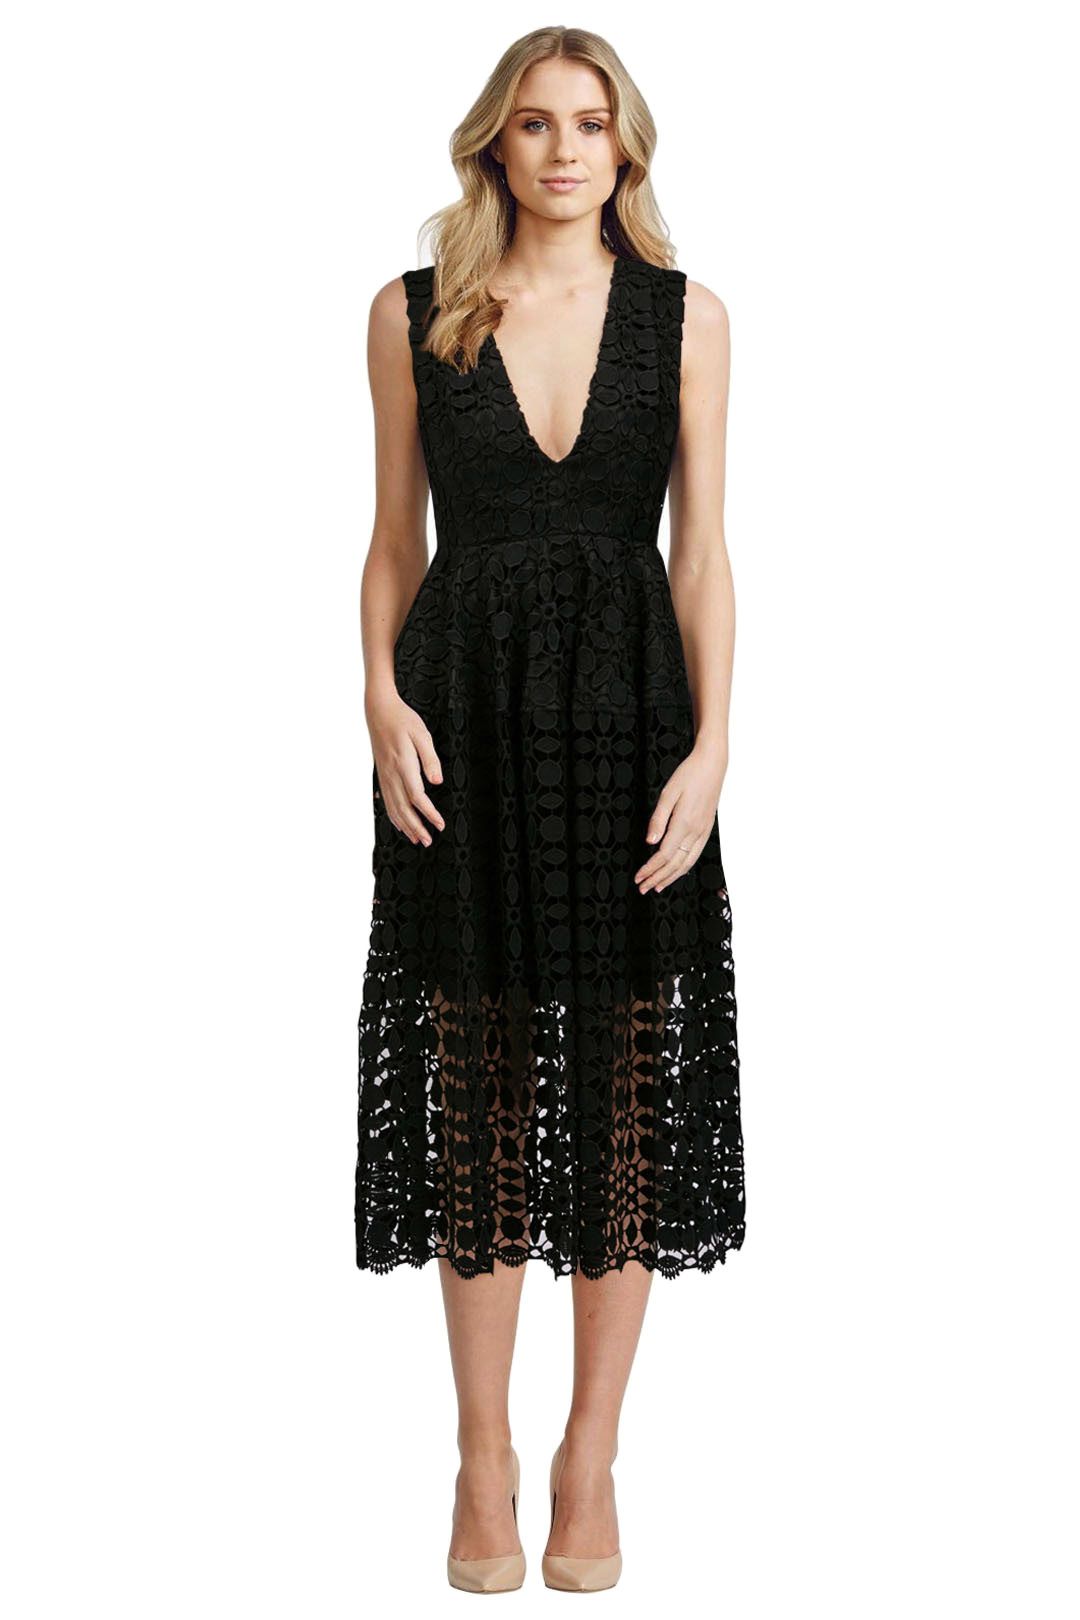 Mosaic Lace Ball Dress - Black - Front